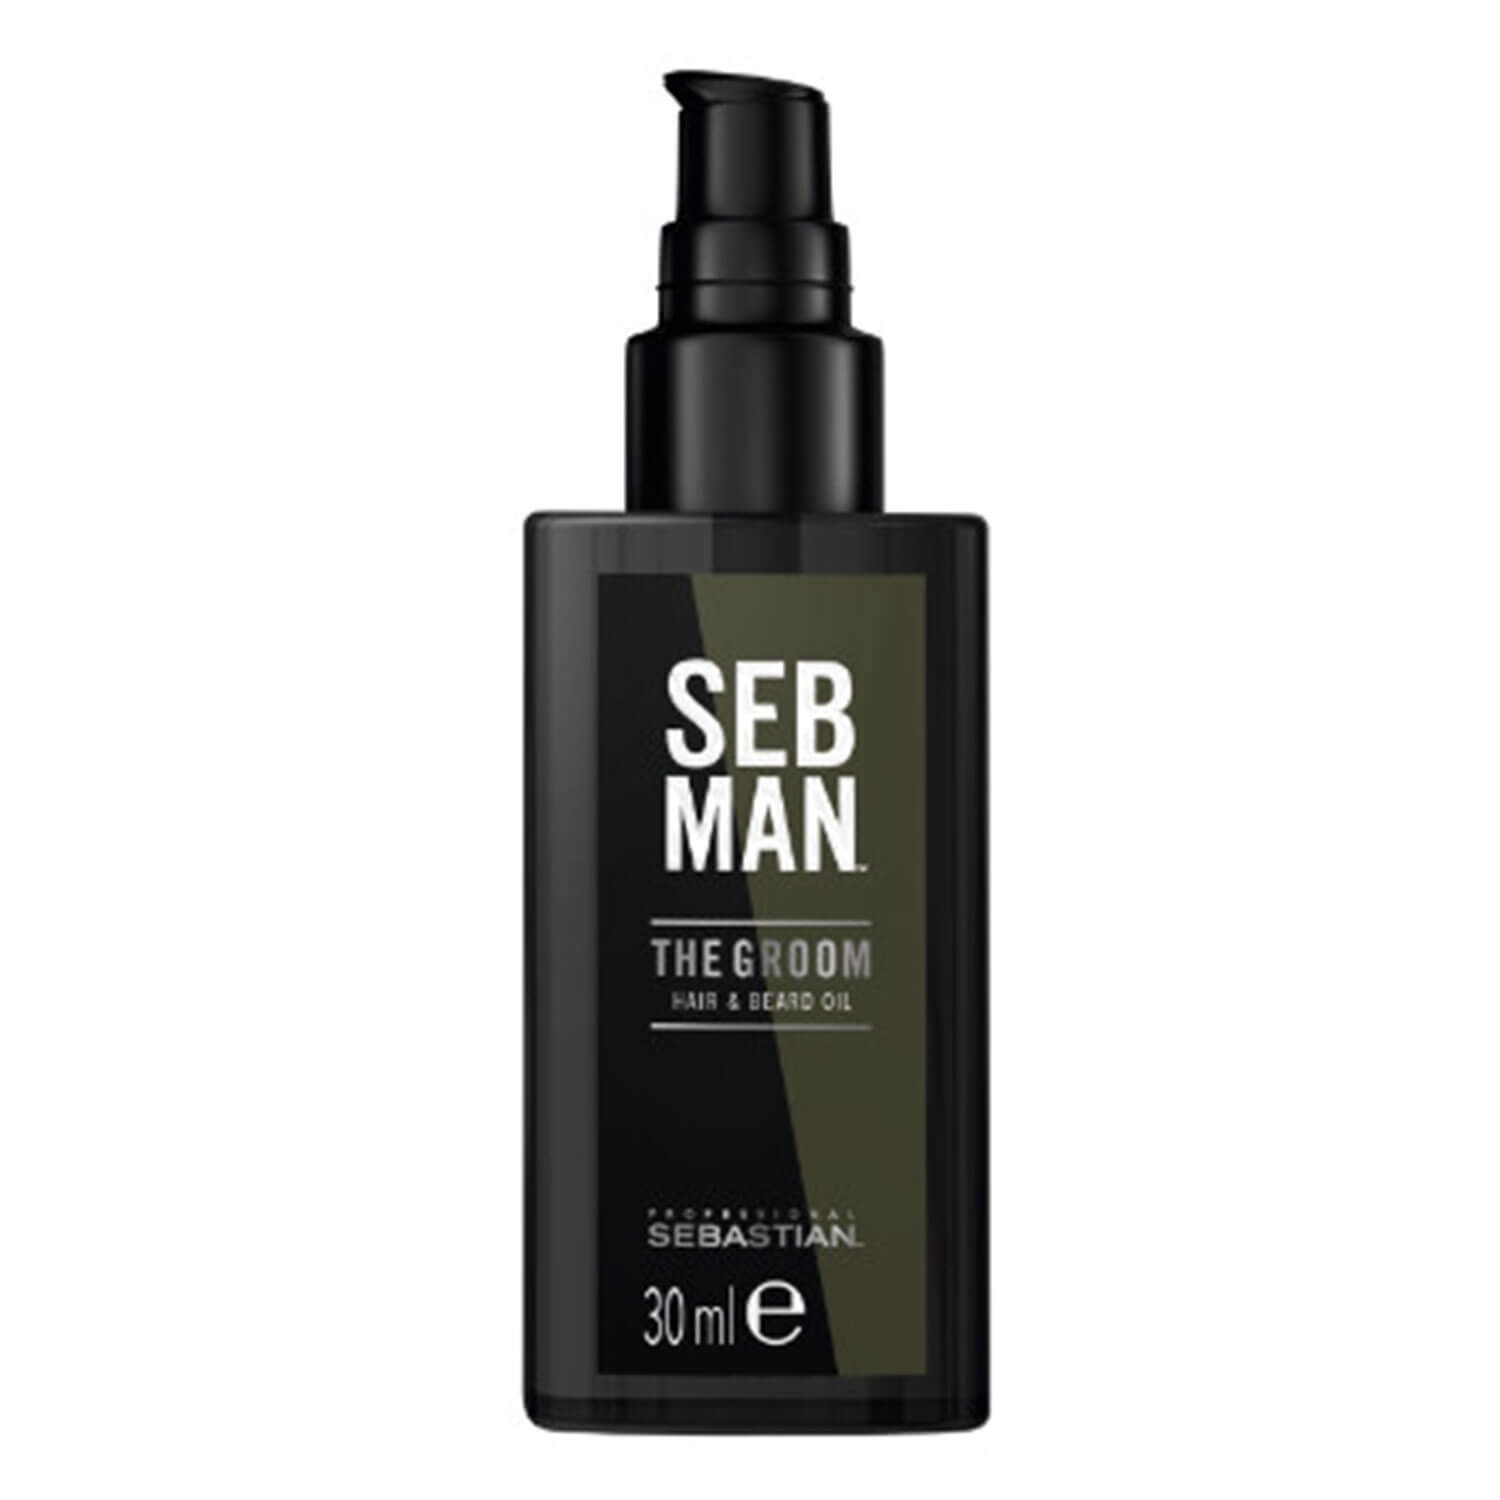 Produktbild von SEB MAN - The Groom Hair & Beard Oil